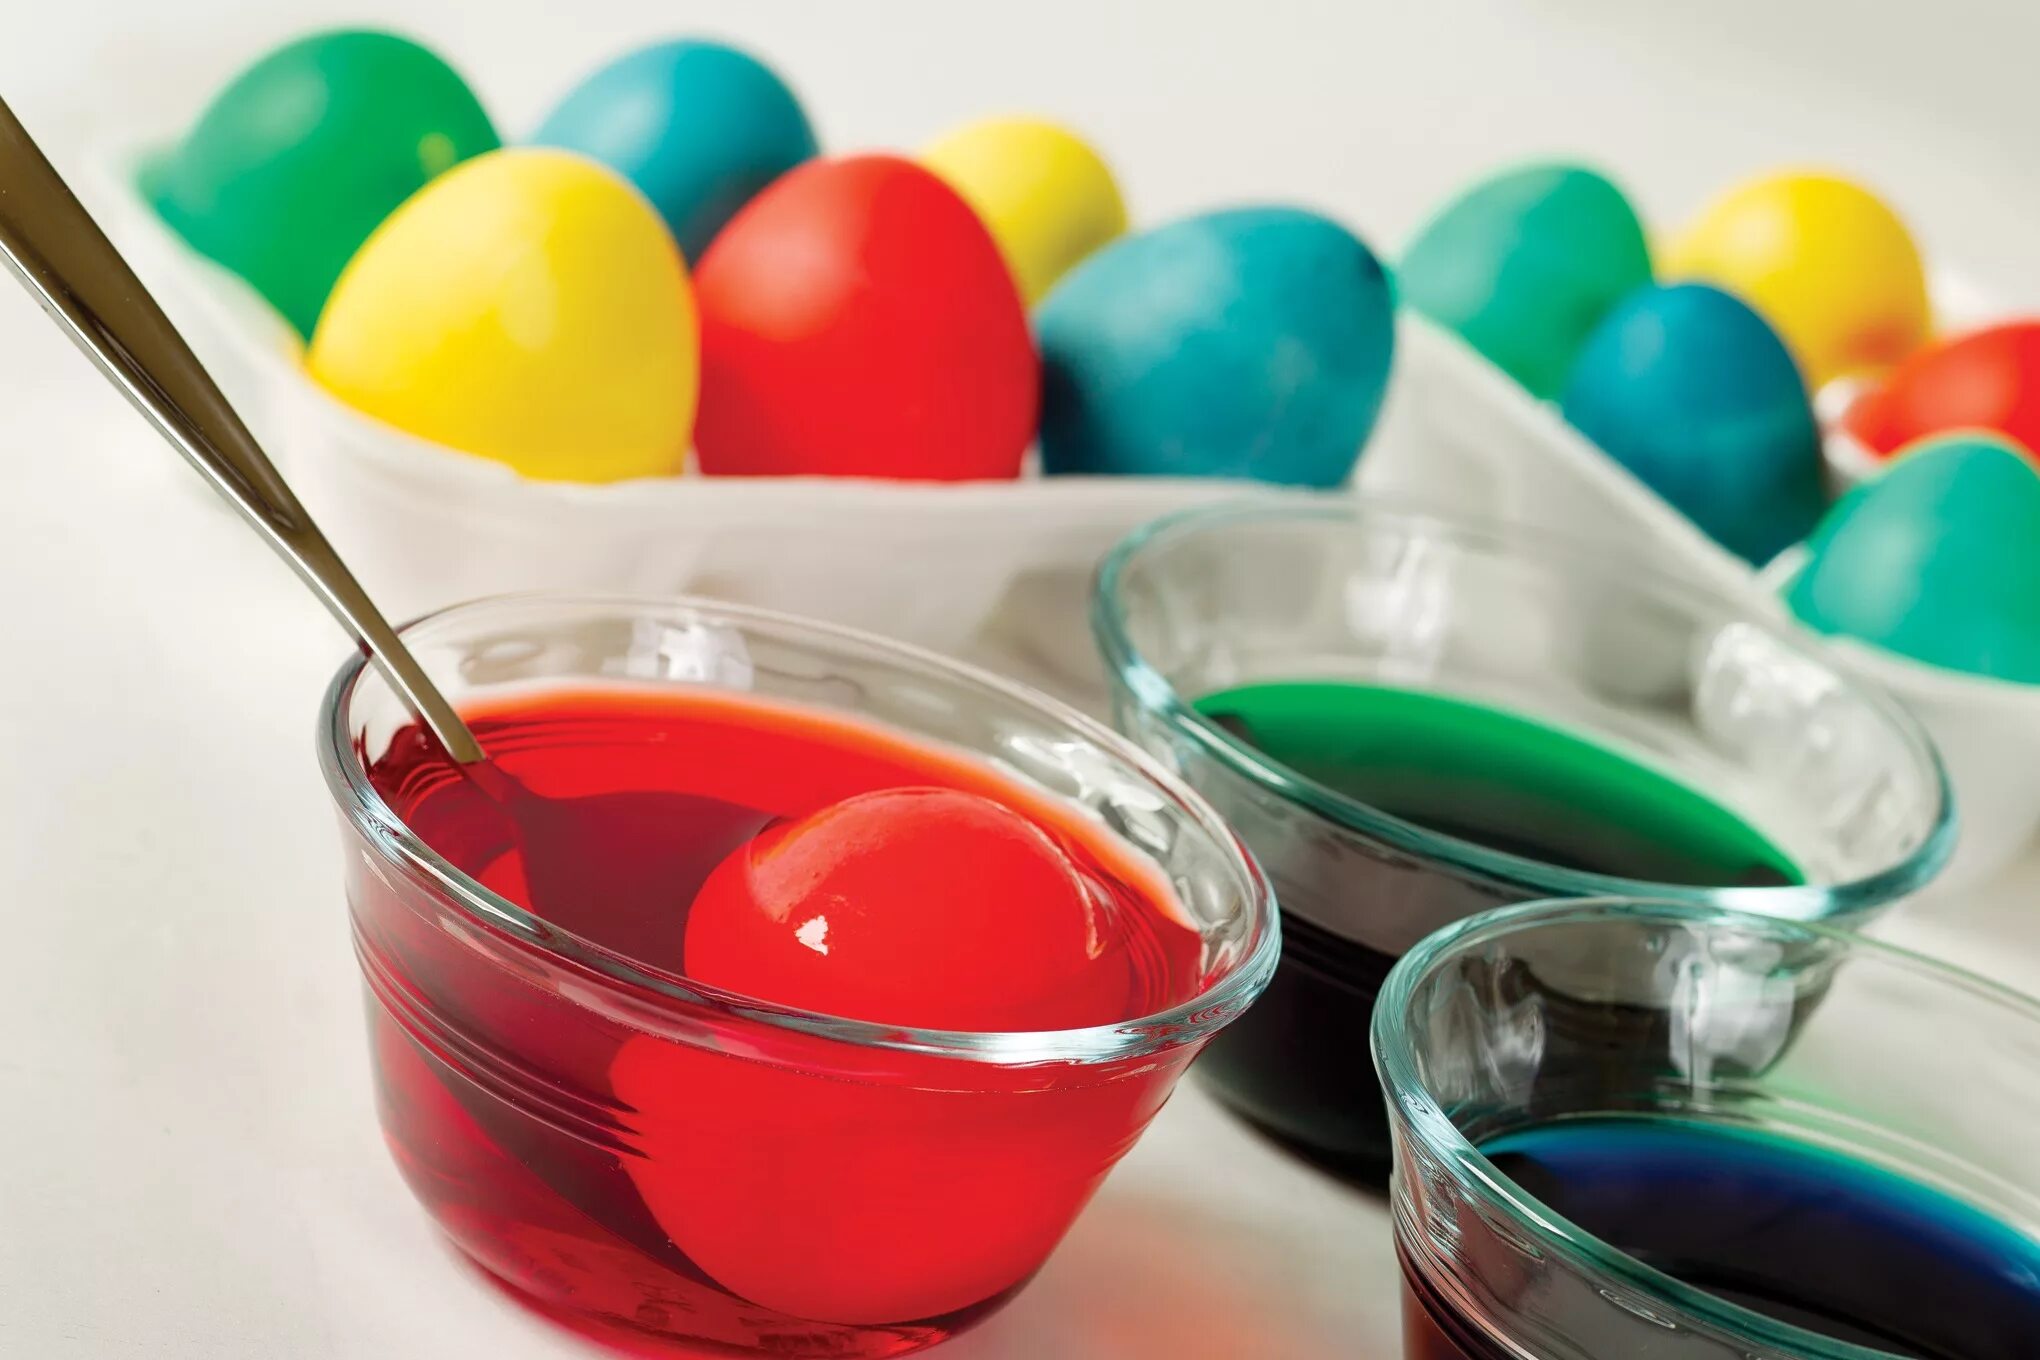 Можно ли покрасить яйца красителем. Краска для яиц. Пищевой краситель для яиц. Крашение яиц пищевыми красителями. Красители для яиц на Пасху.